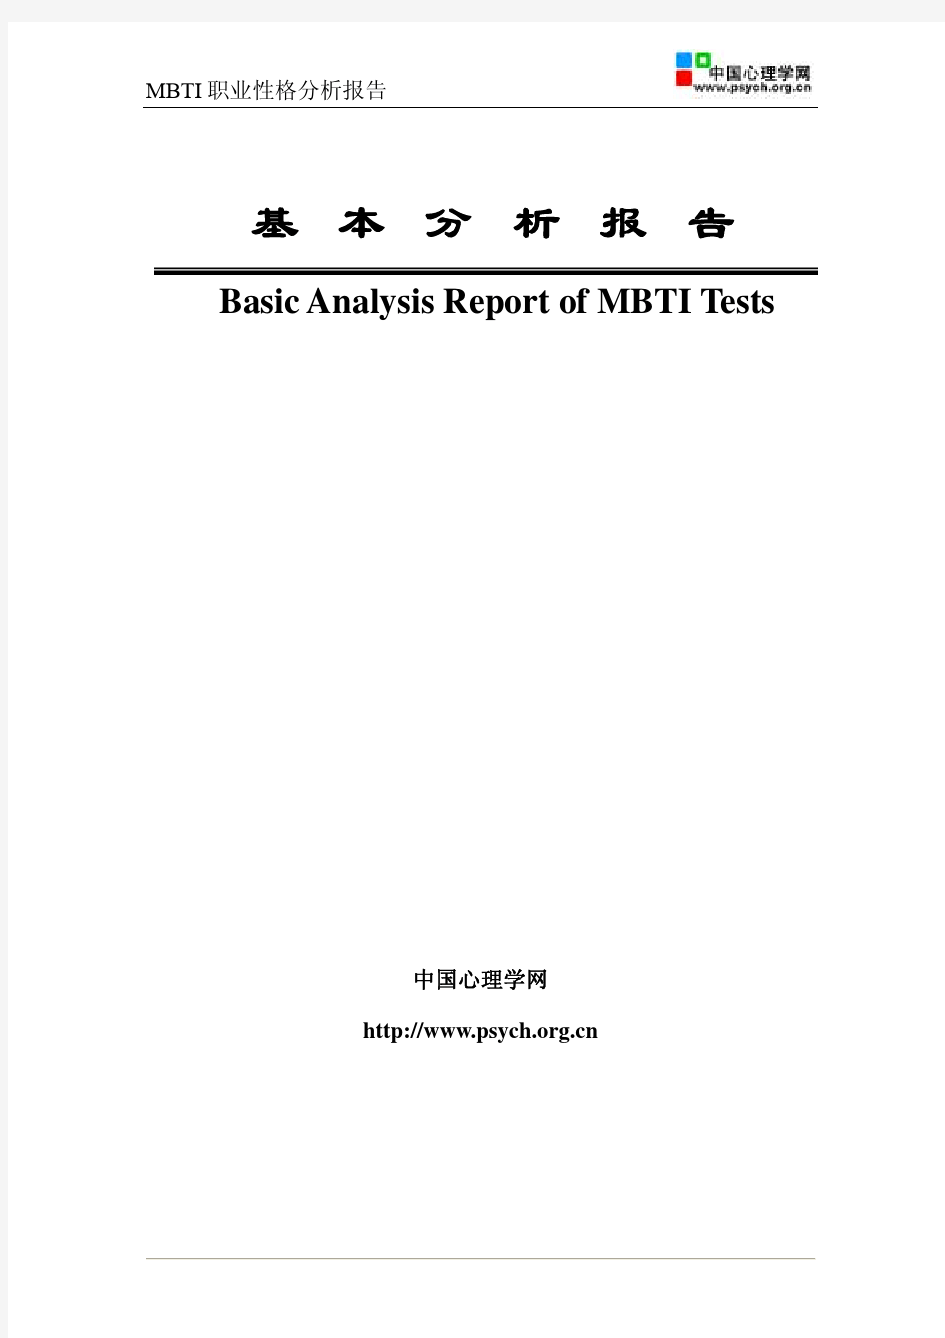 MBTI职业性格测试(ENFJ)